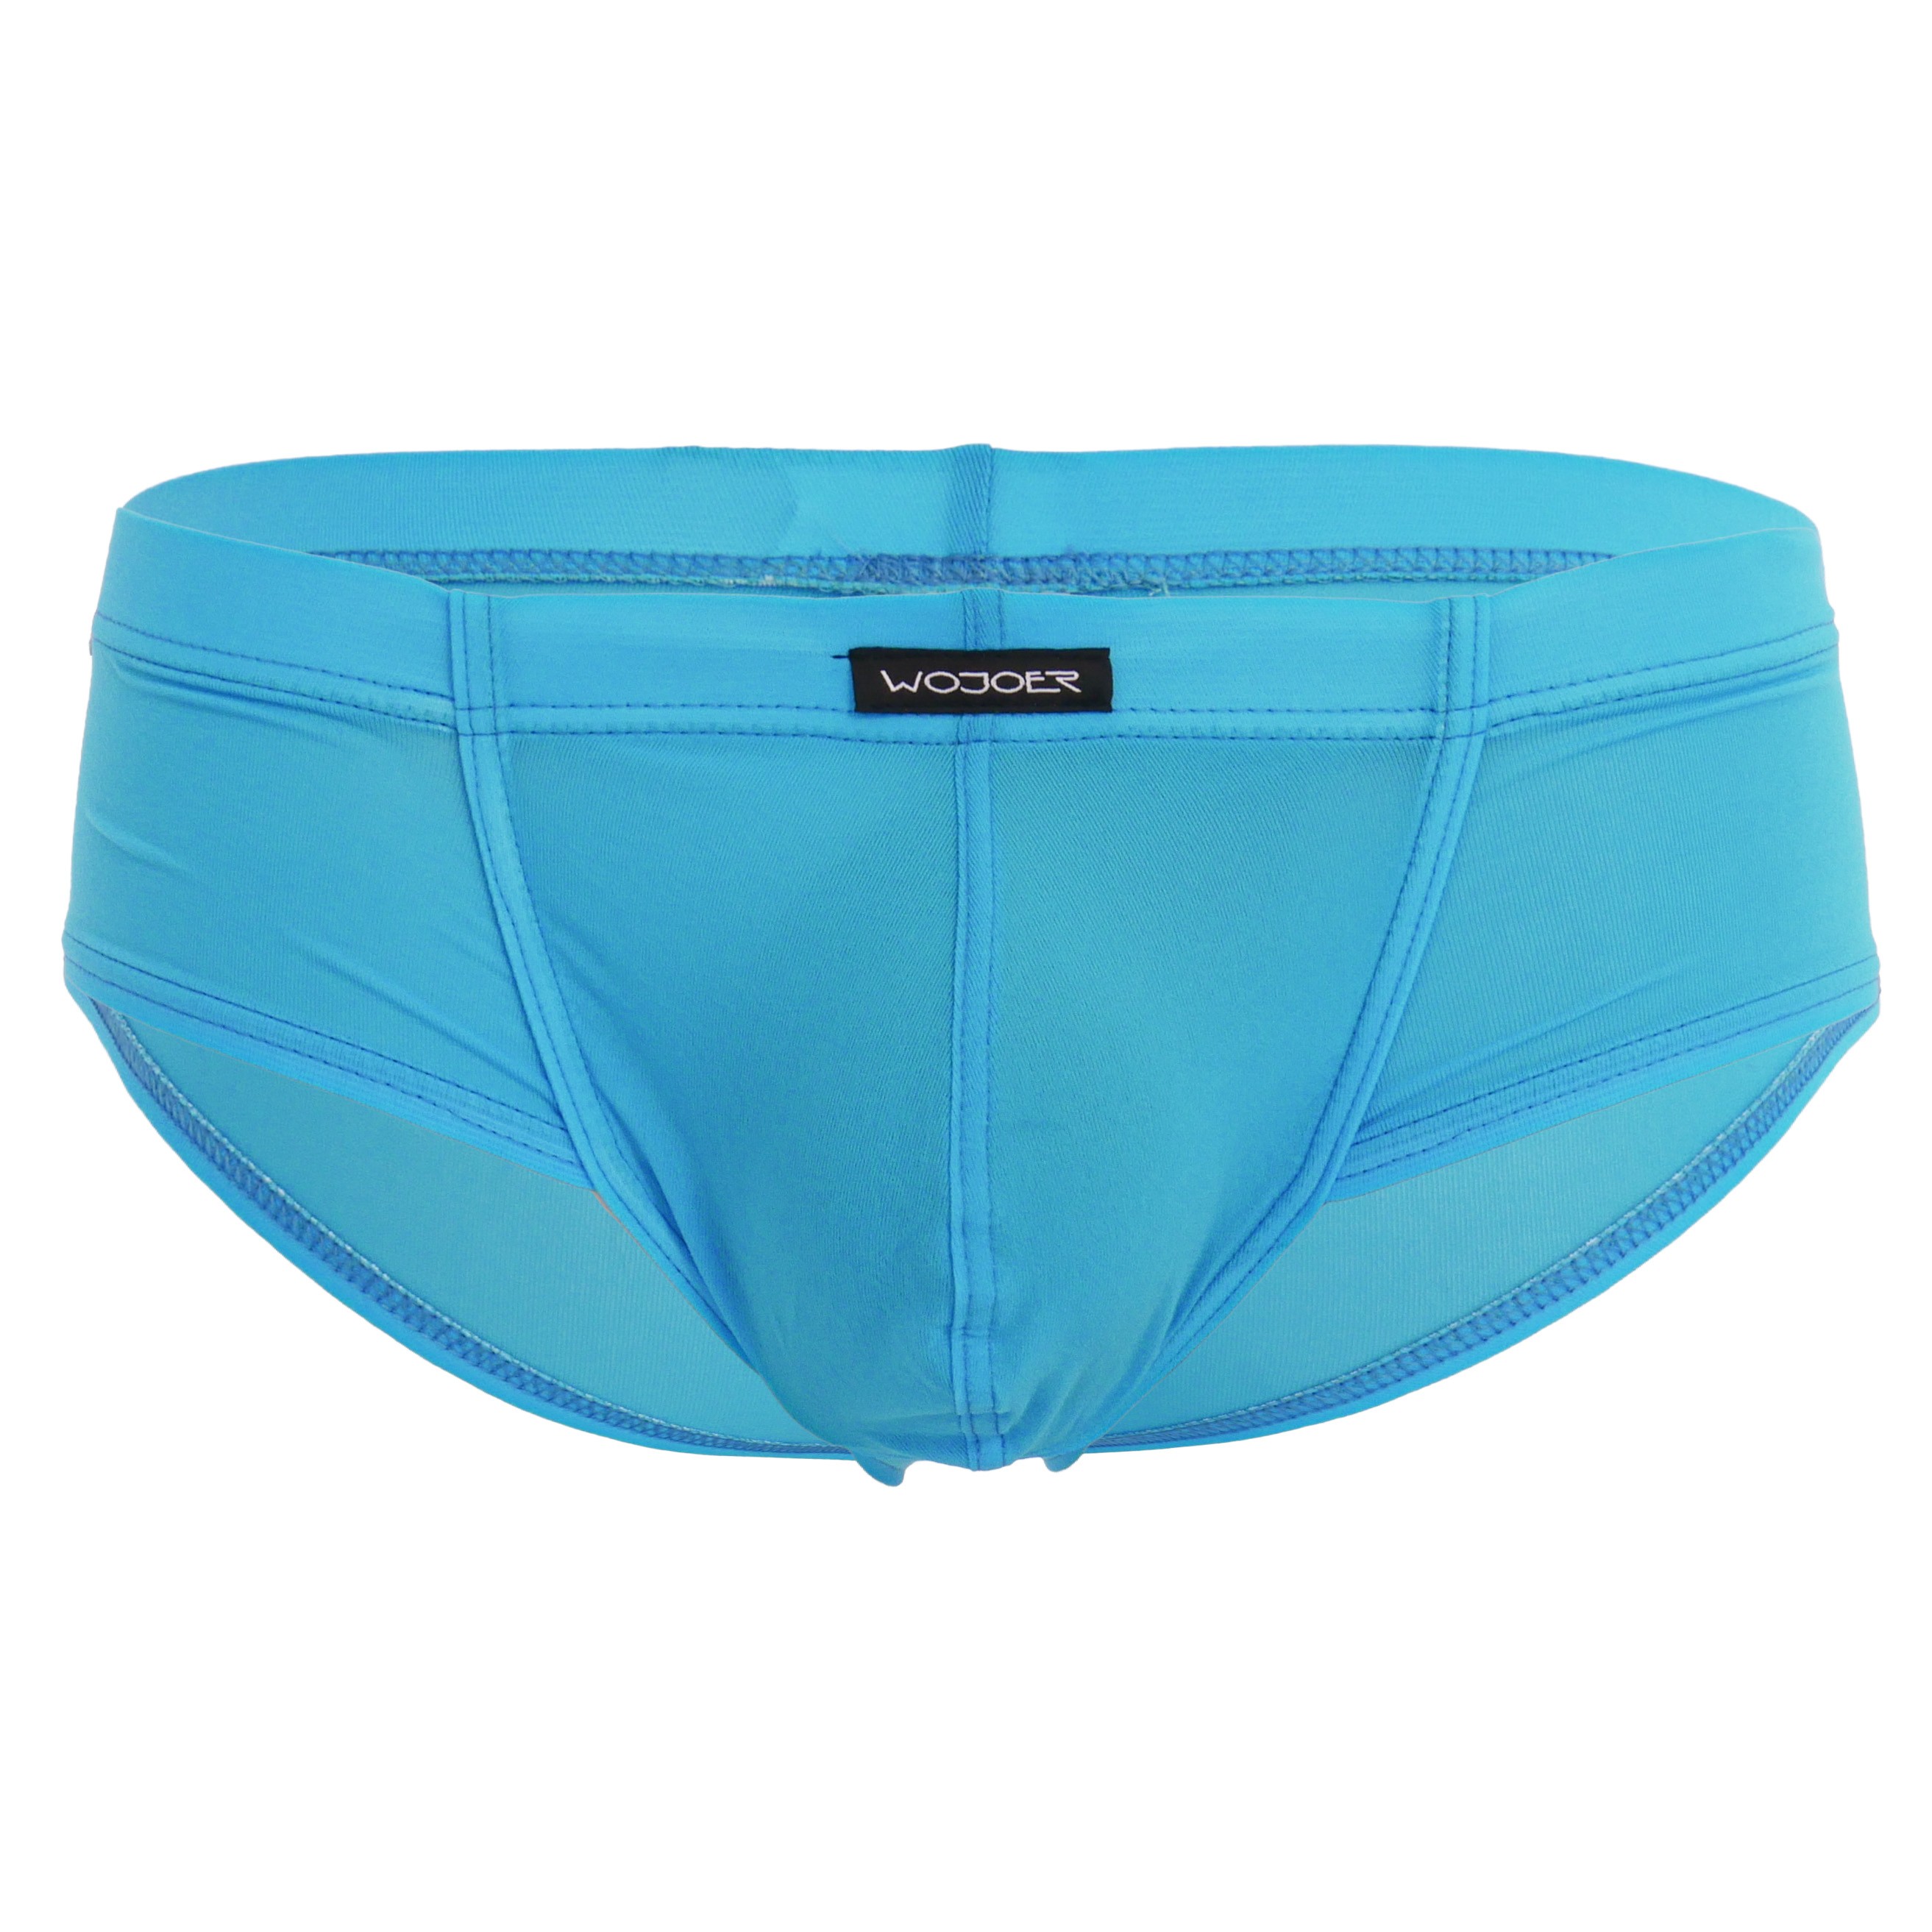 Hipster beach - underwear - turquoise: Boxers for man brand Wojoer ...